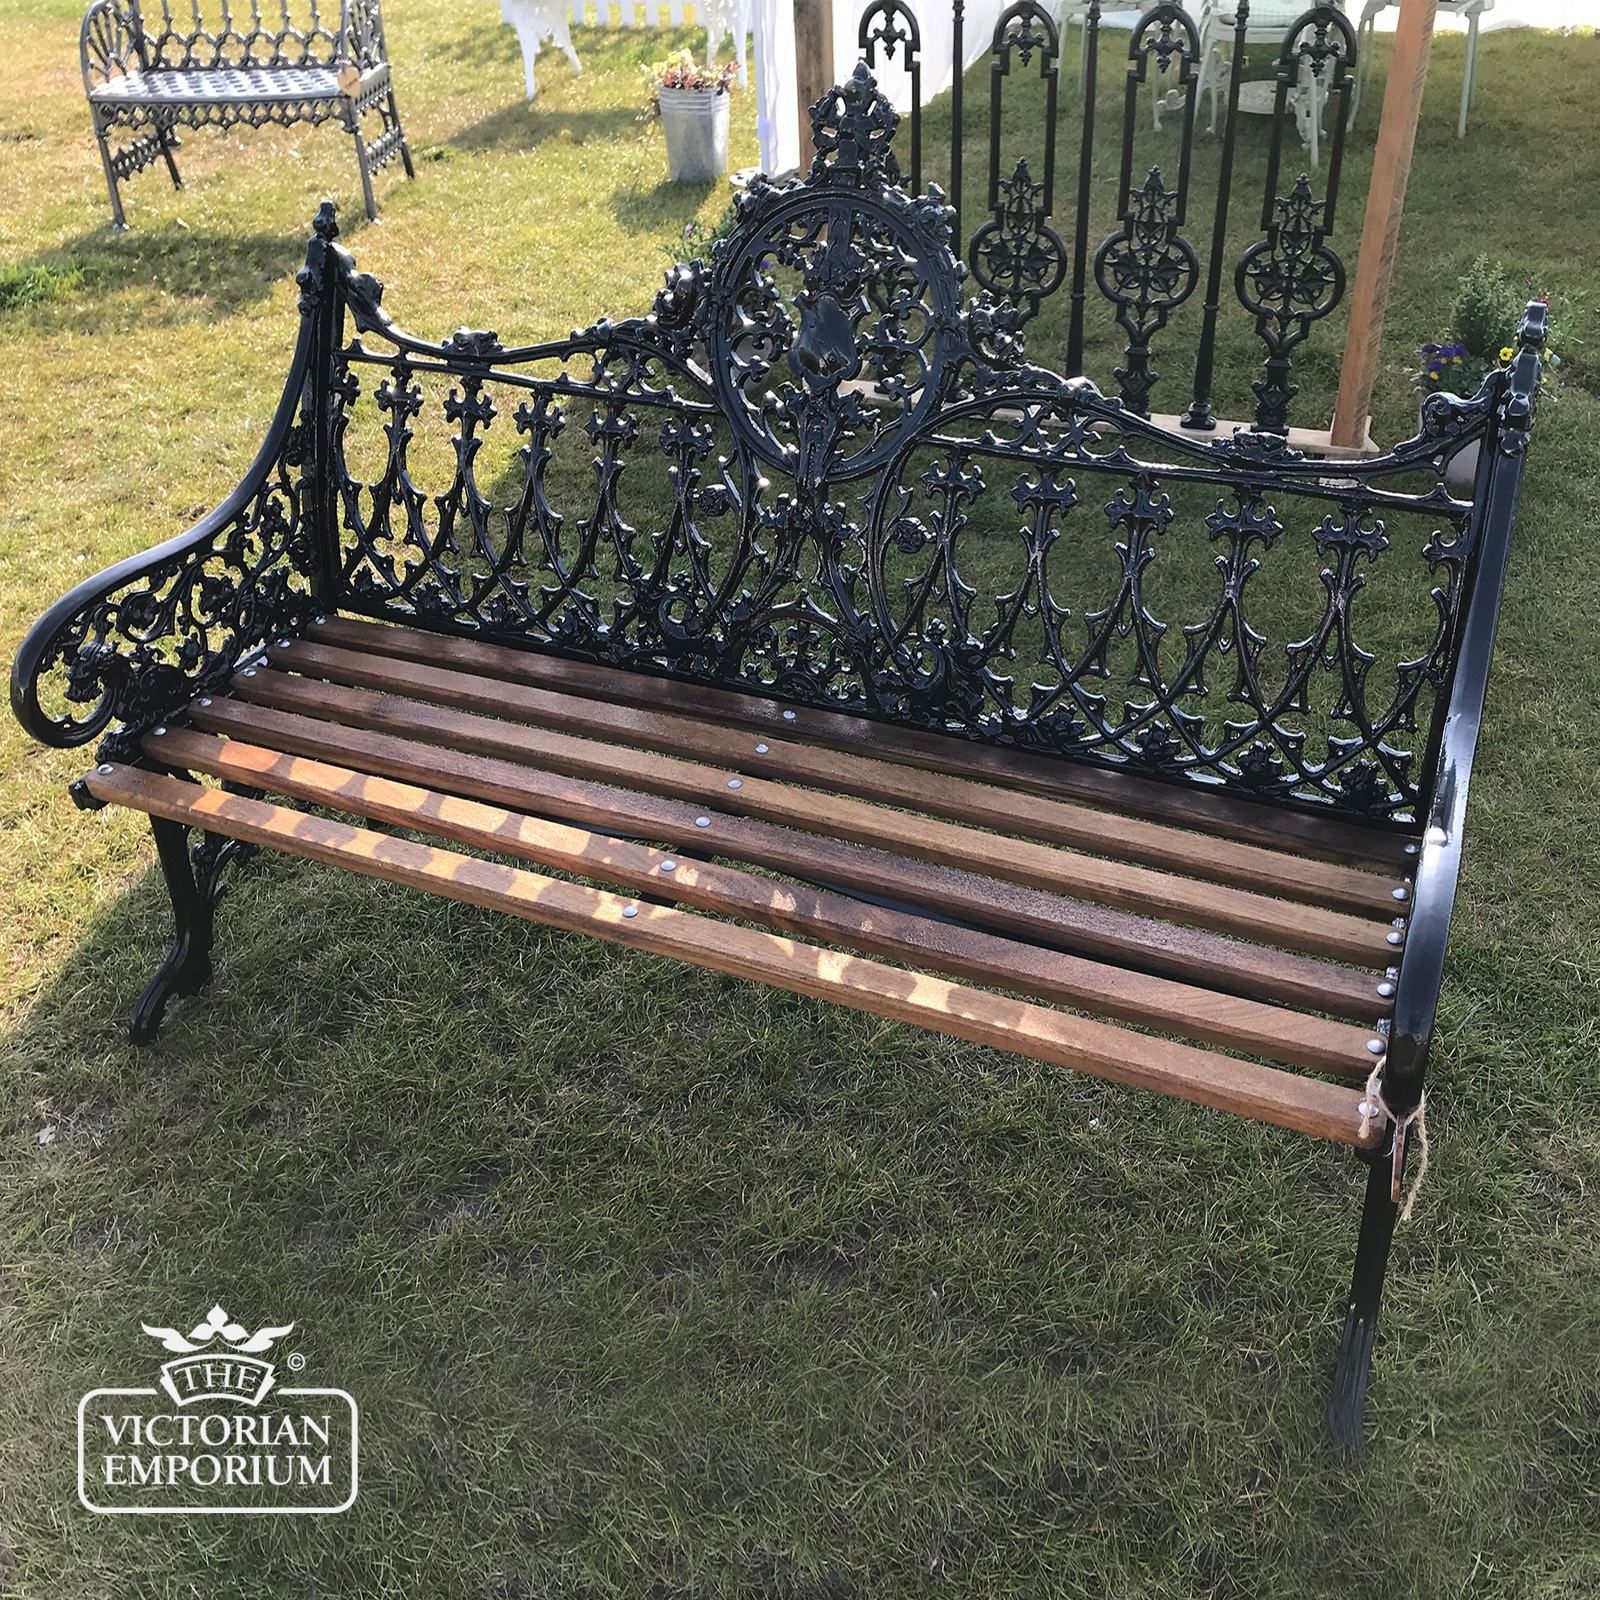 https://www.thevictorianemporium.com/images/uploads/products/72221/victorian-cast-gothic-style-garden-bench-cast_iron_garden_bench-5080__large.jpg